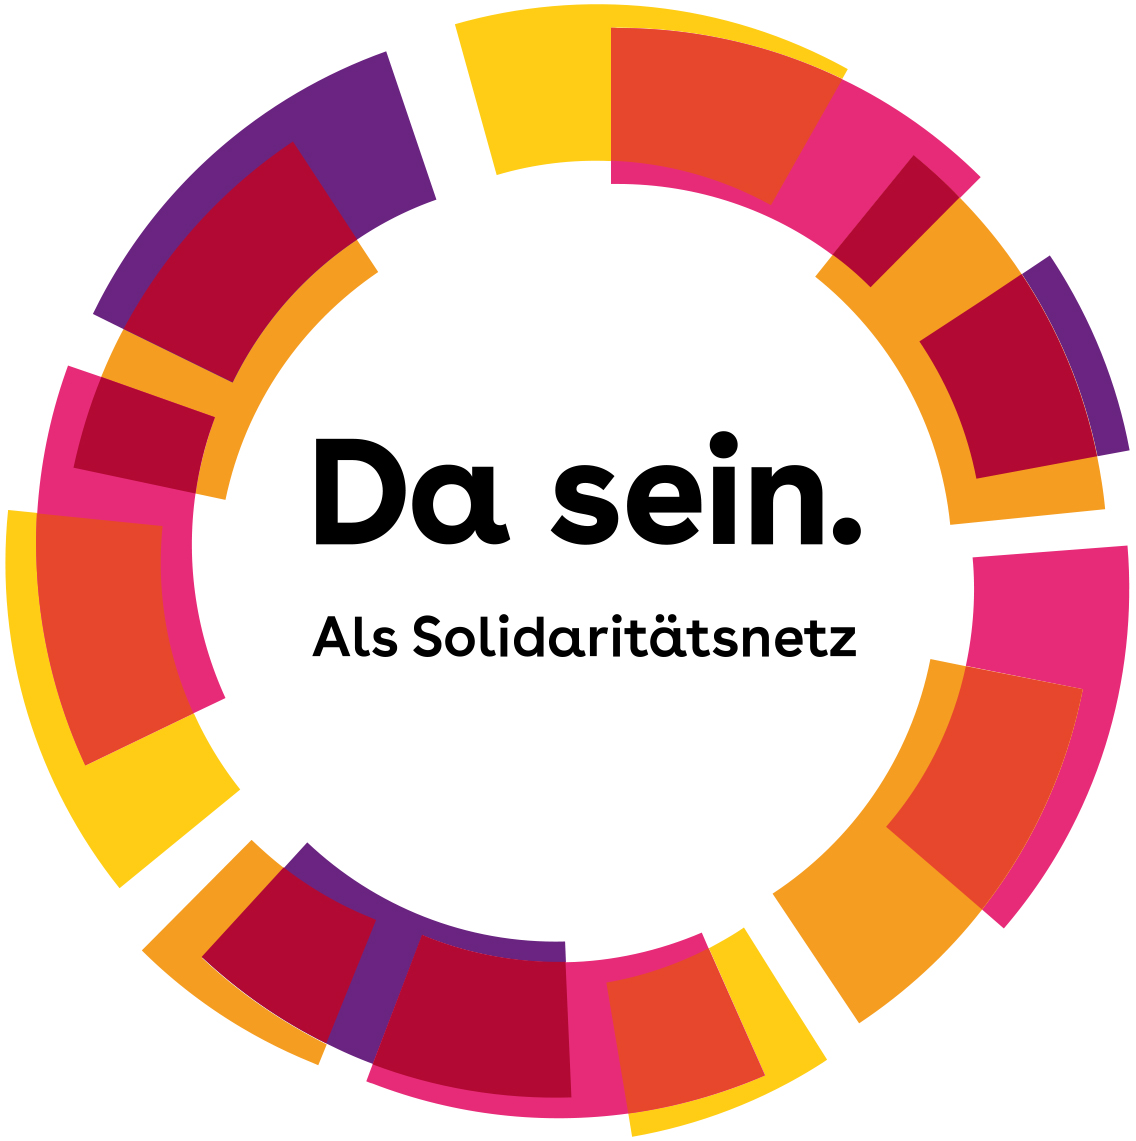 Logo_Da_sein_als_Solidaritätsnetz (Kreis_Soli_ZW_rgb_20211001)